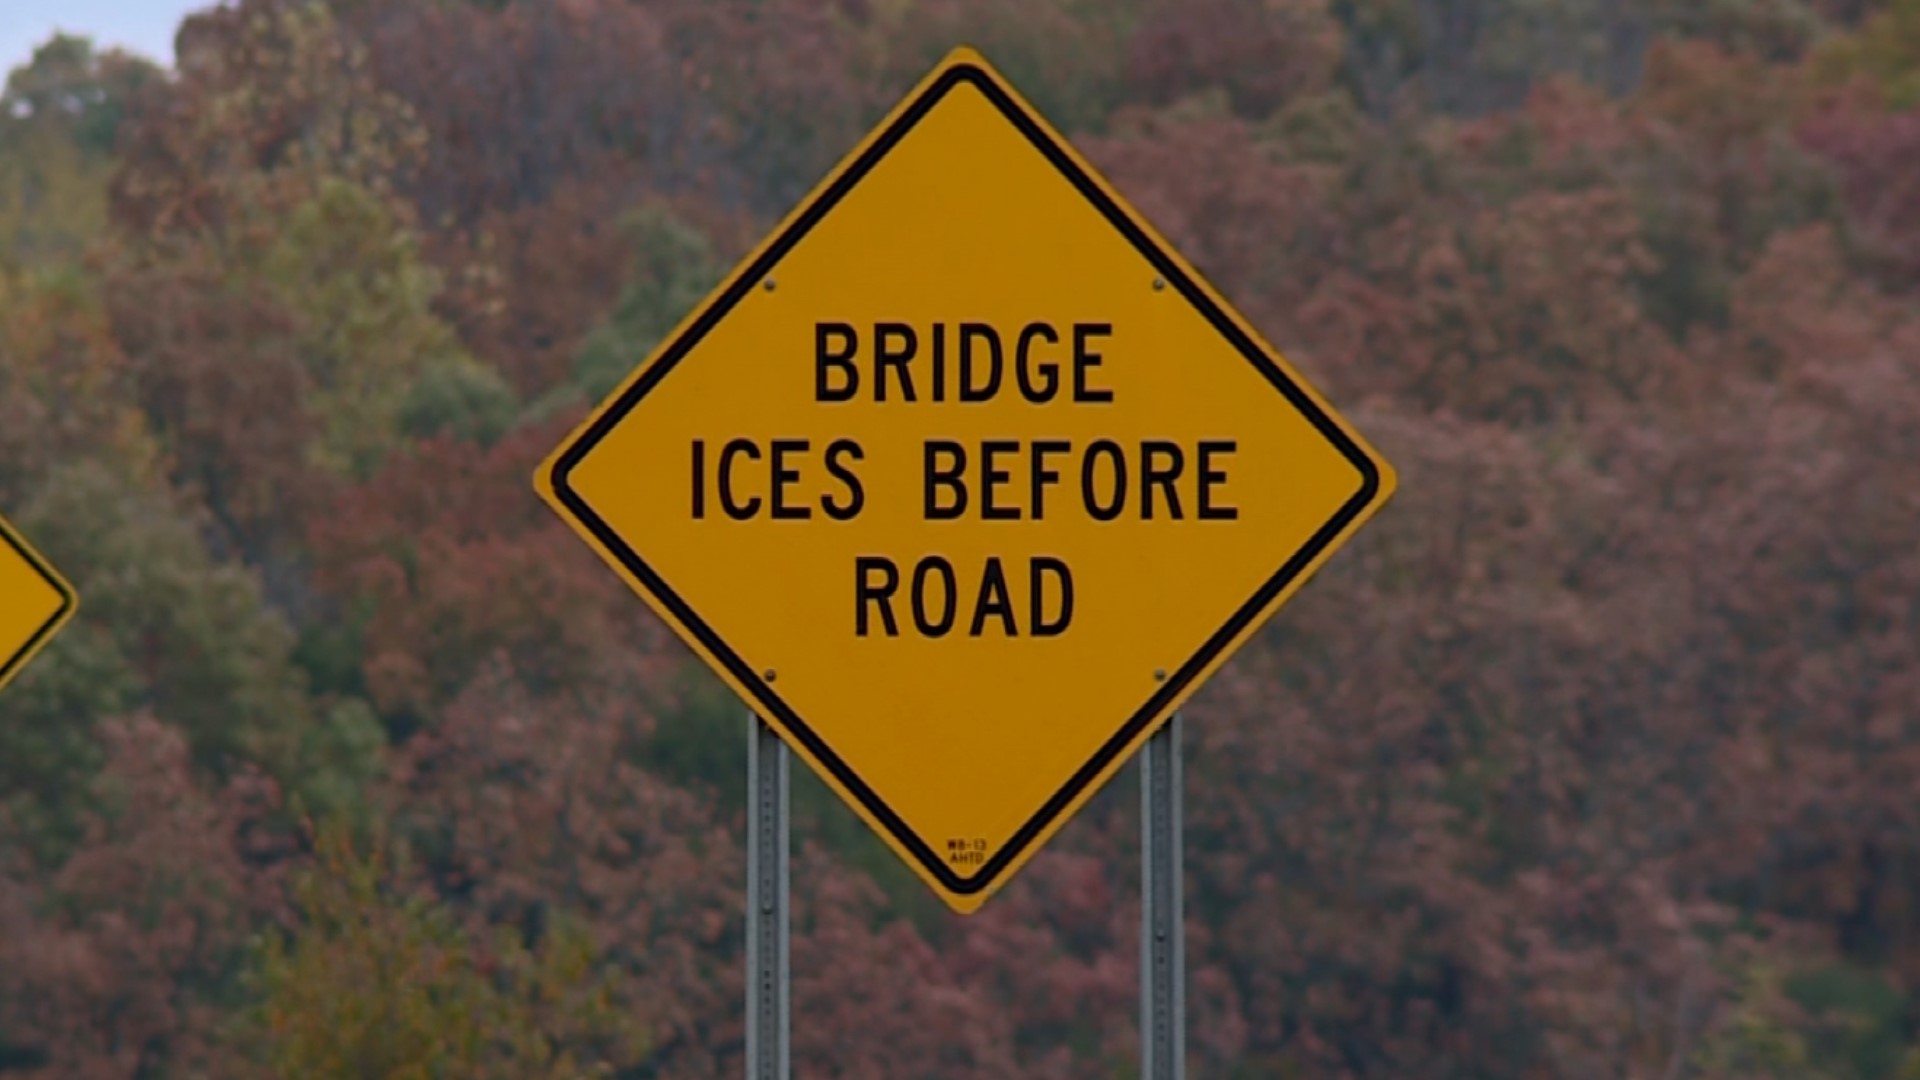 5NEWS Meteorologist Stephen Elmore explains the phenomenon behind bridges freezing before roads.